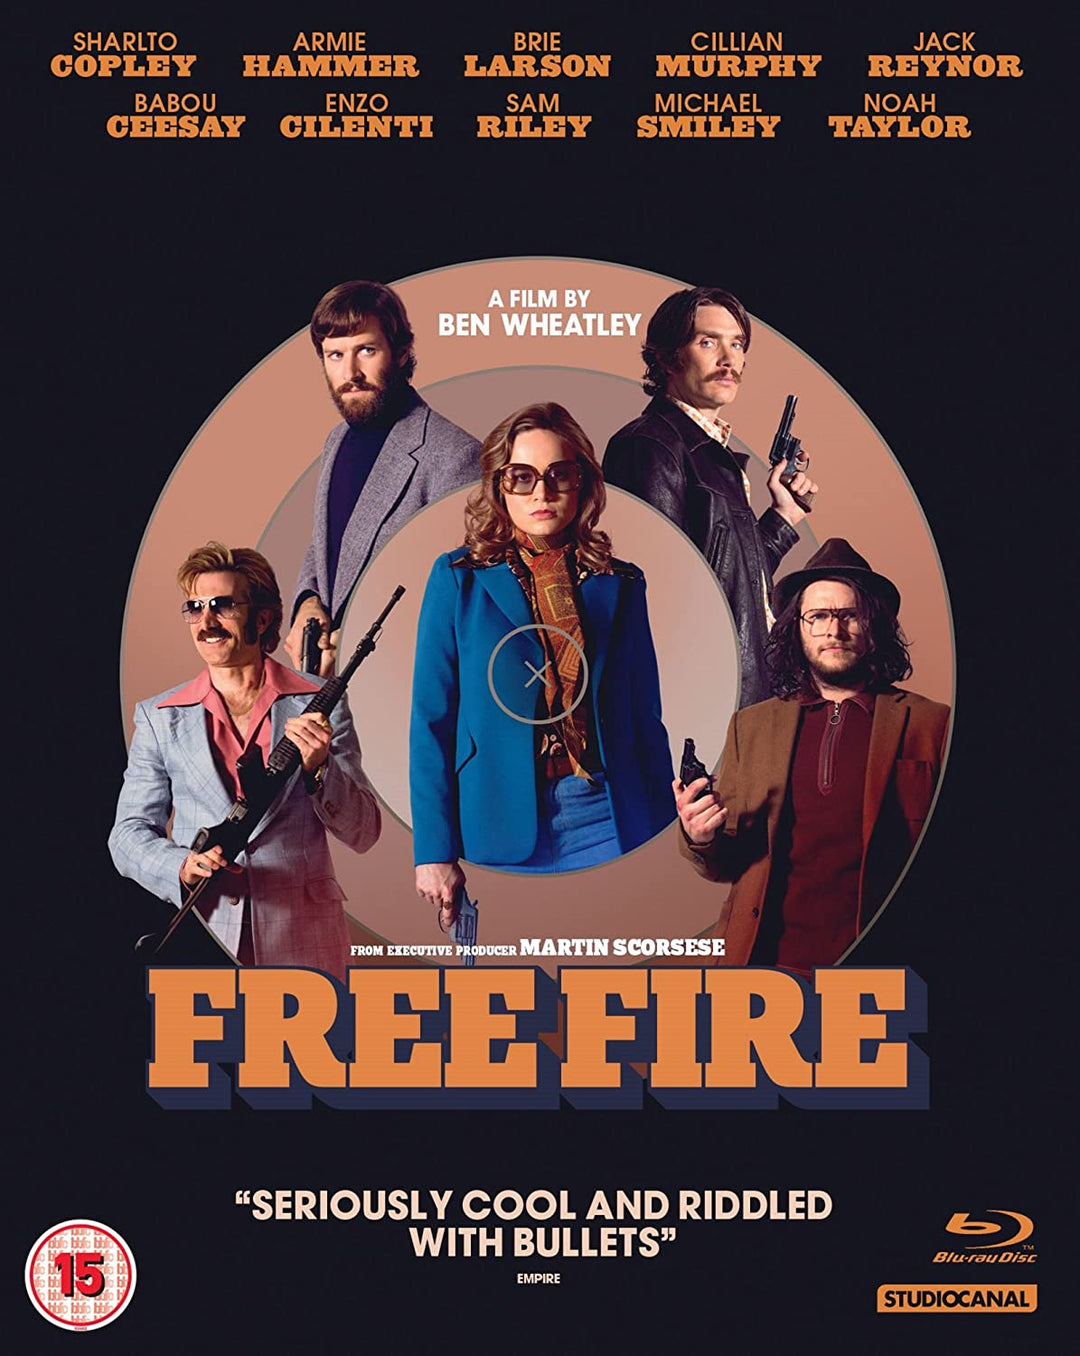 Free Fire [Blu-ray]